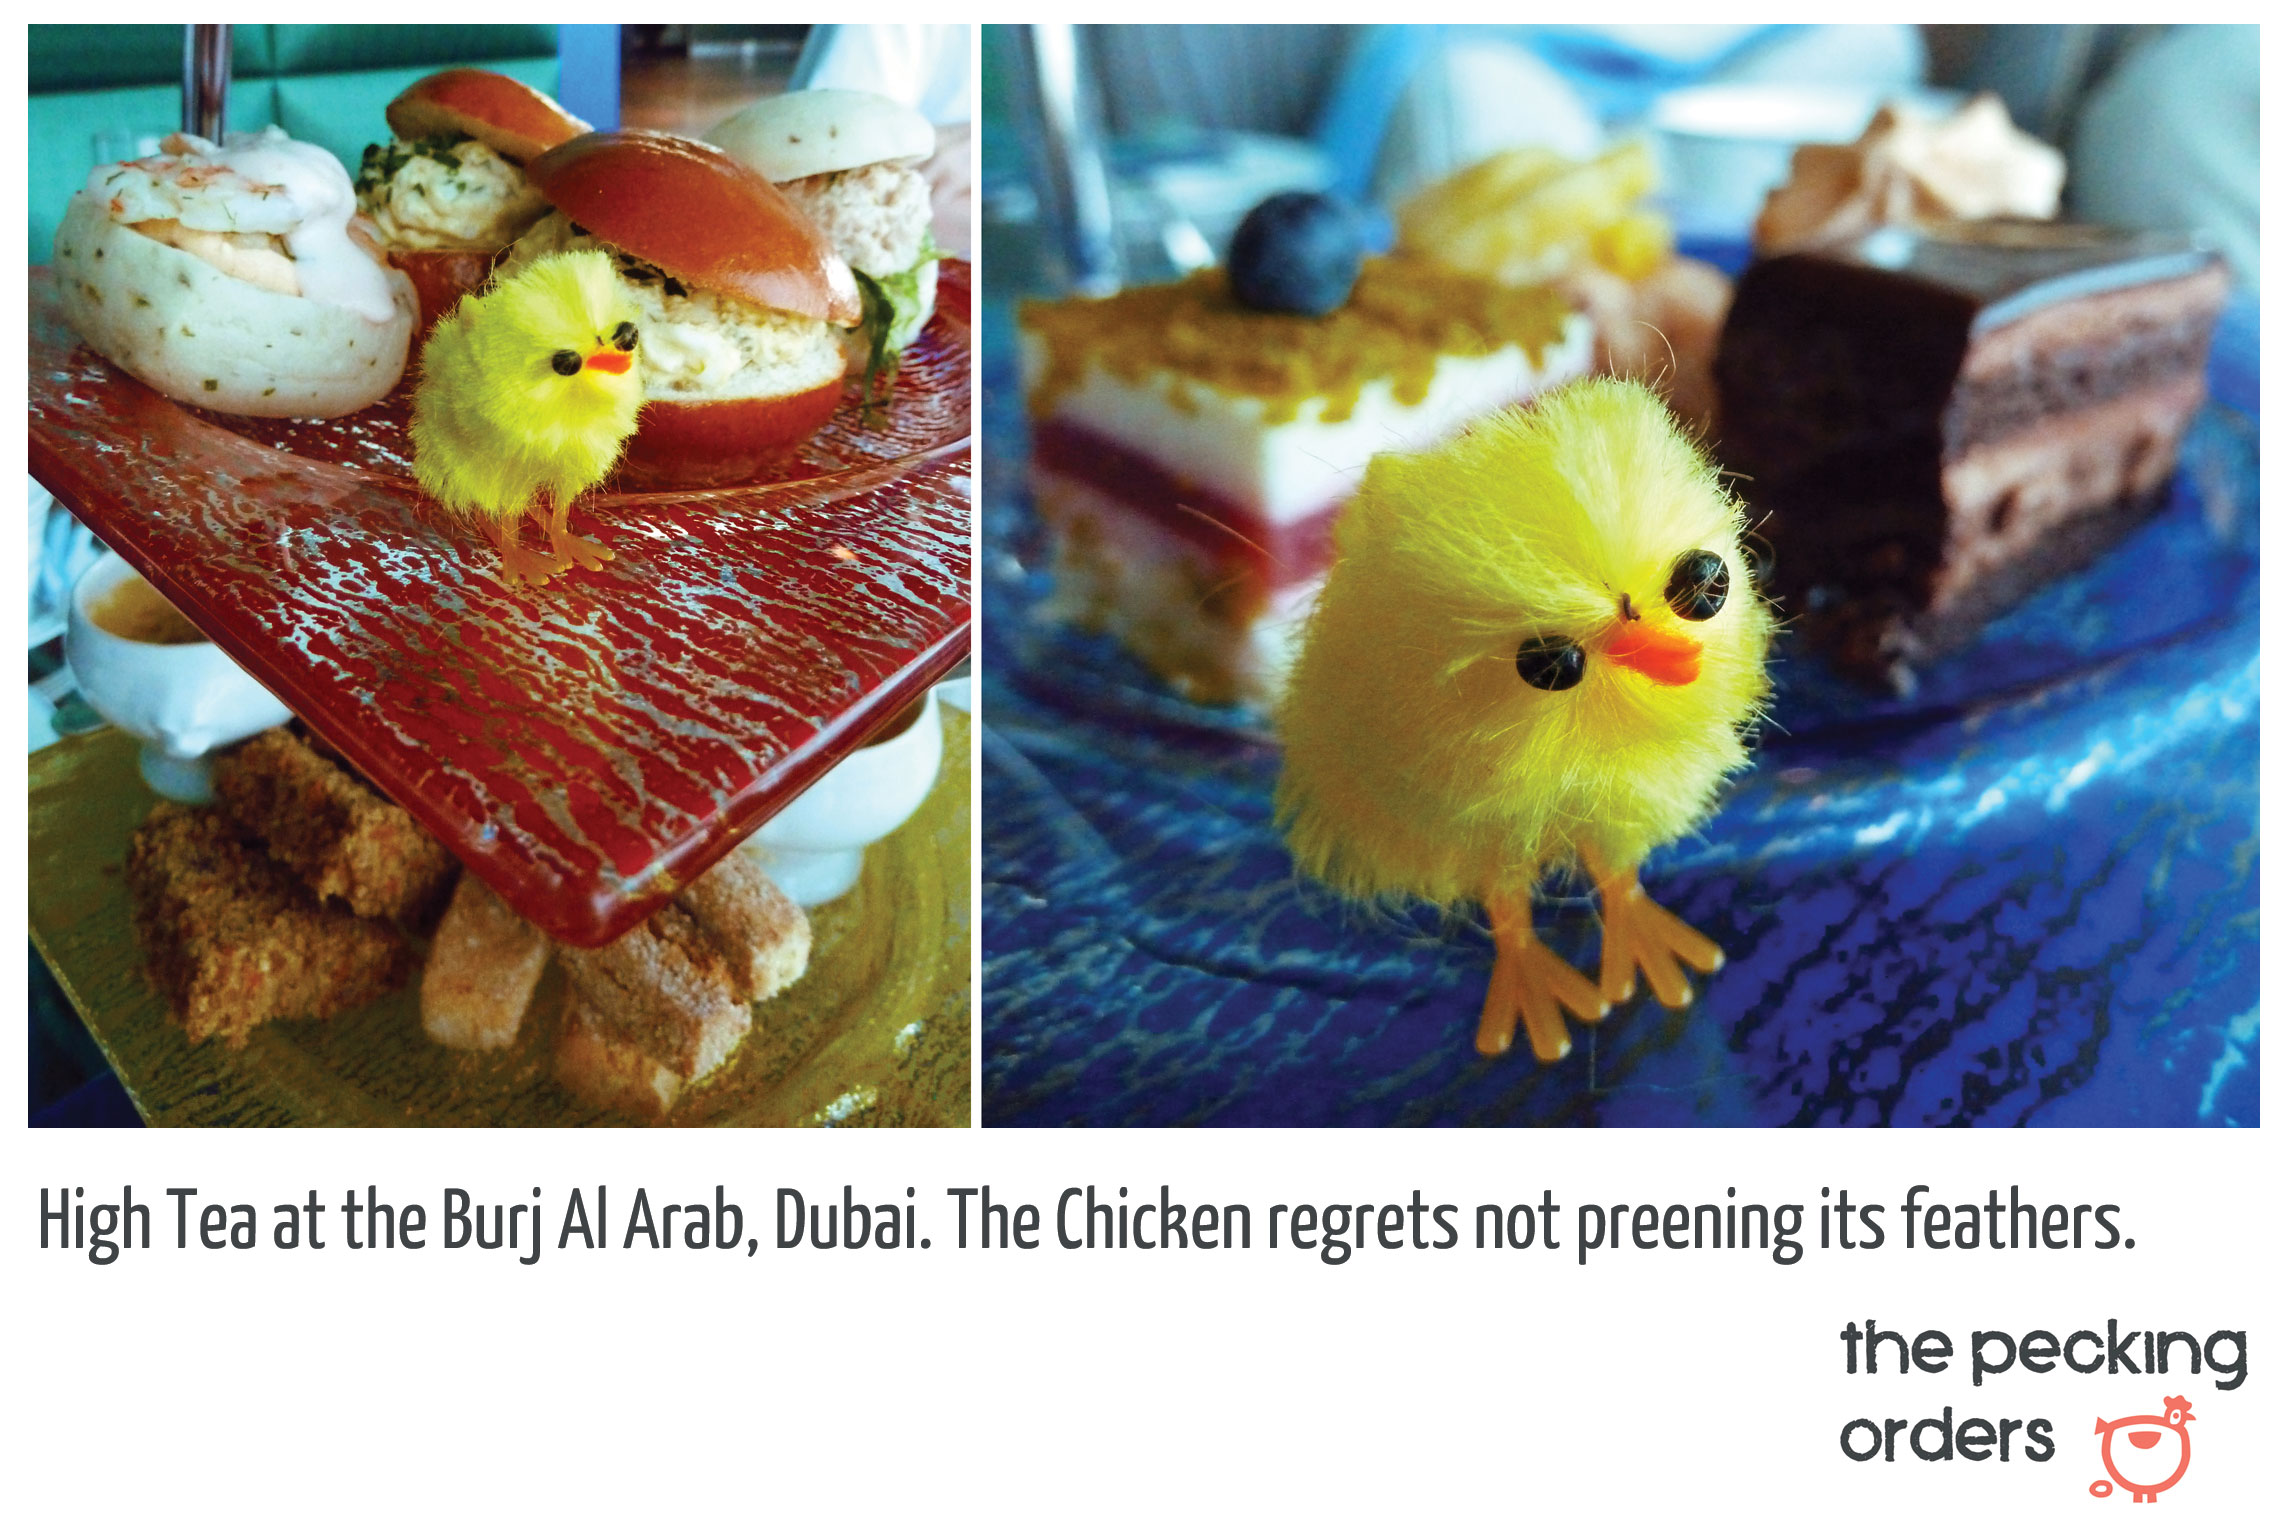 Dubai, Pecking Orders, chicken, travel, civilized, high tea, regret, Burj al Arab, photo